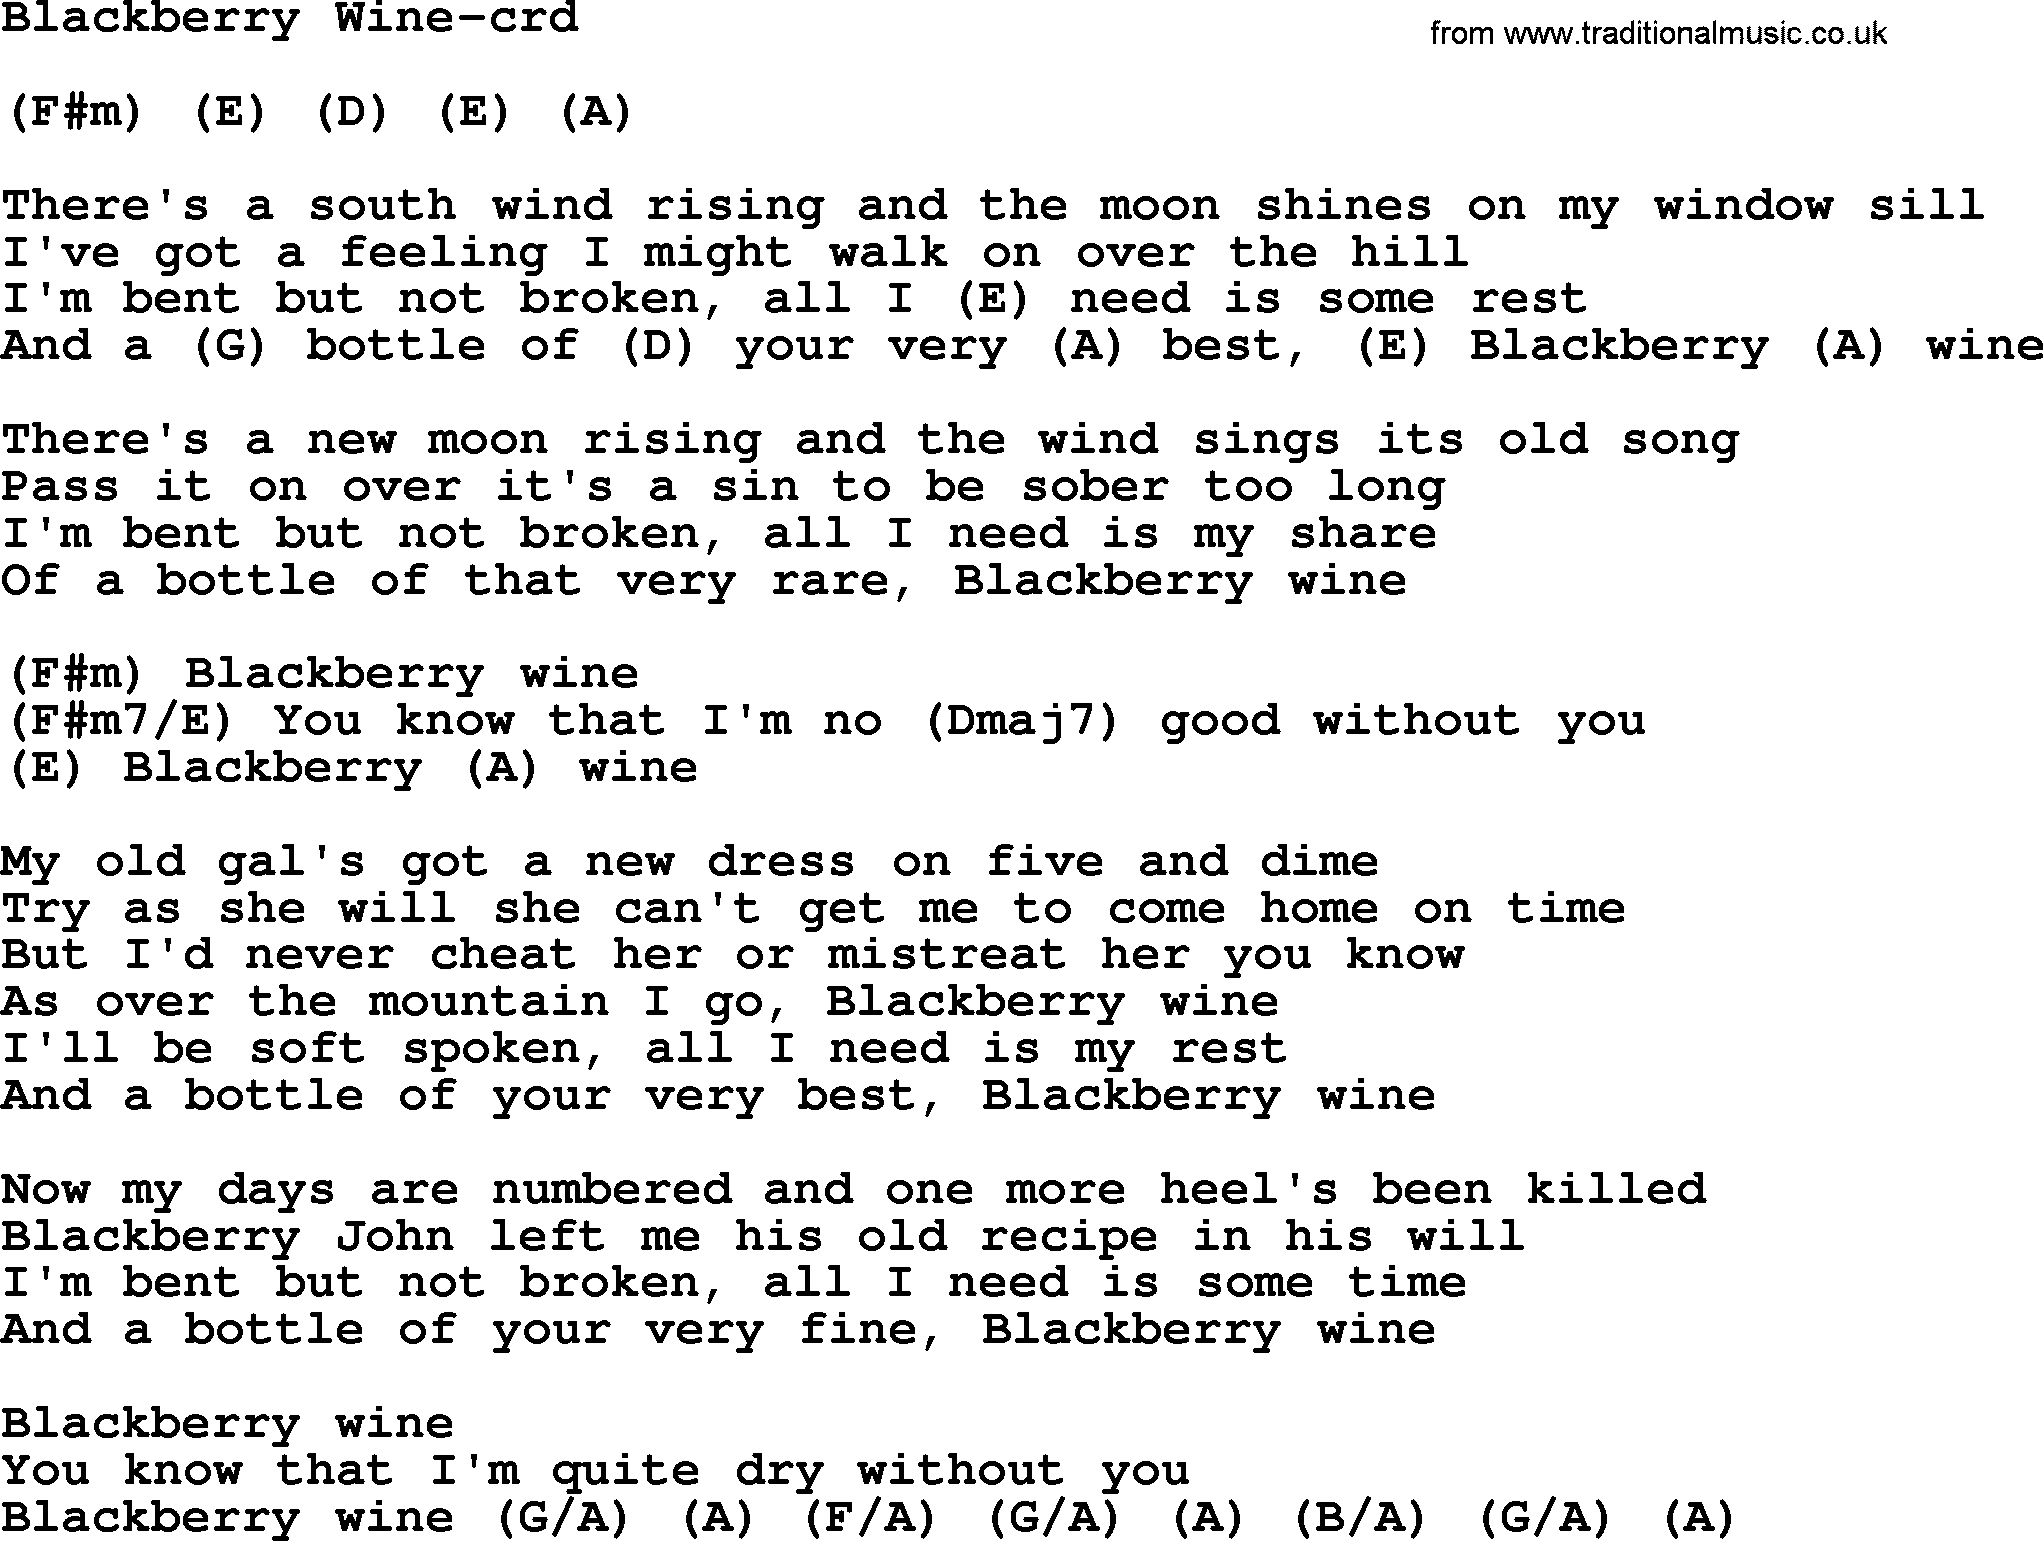 Gordon Lightfoot song Blackberry Wine, lyrics and chords